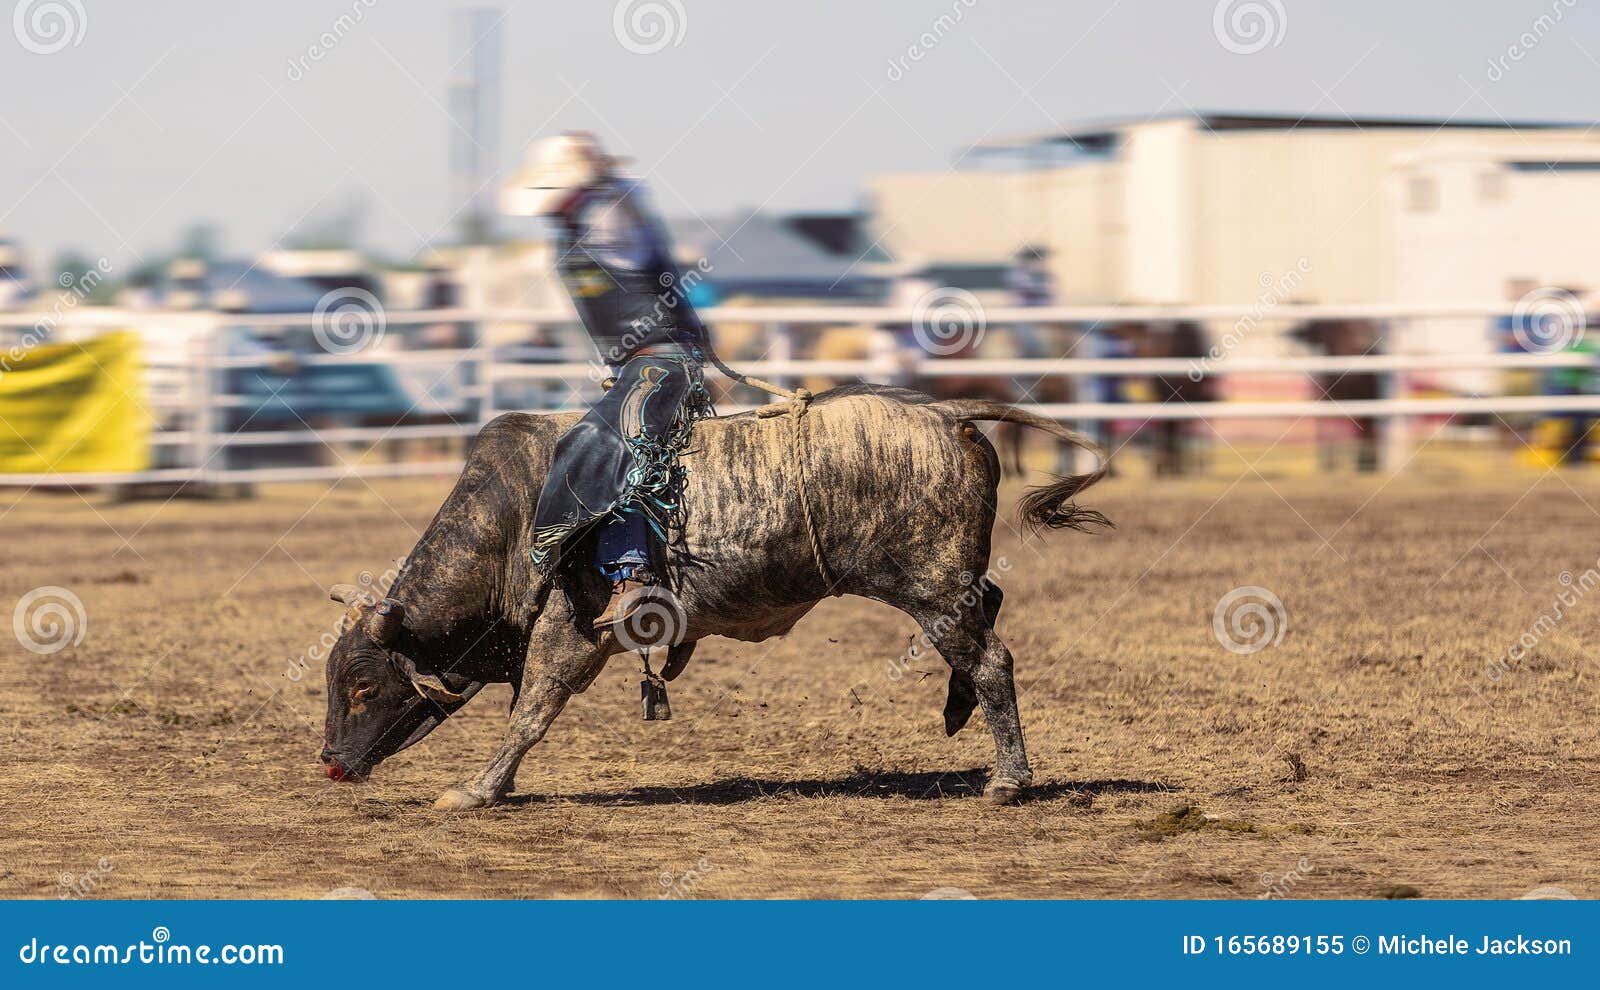 Rodeo bucking bull Stock Photo: 11718968 - Alamy